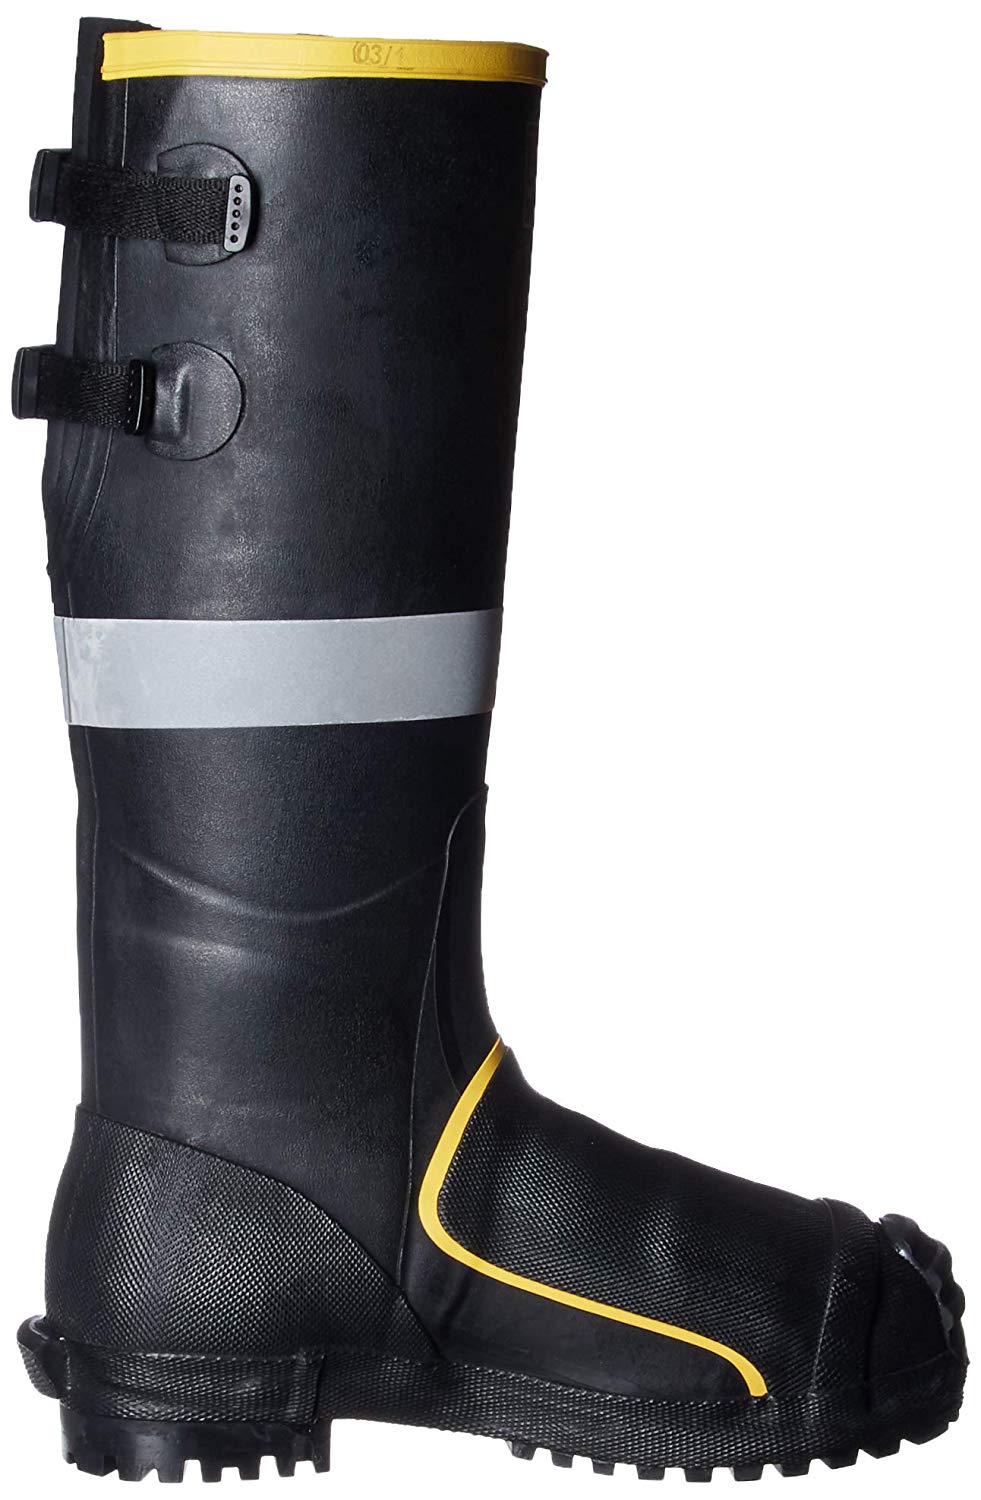 metatarsal steel toe boots